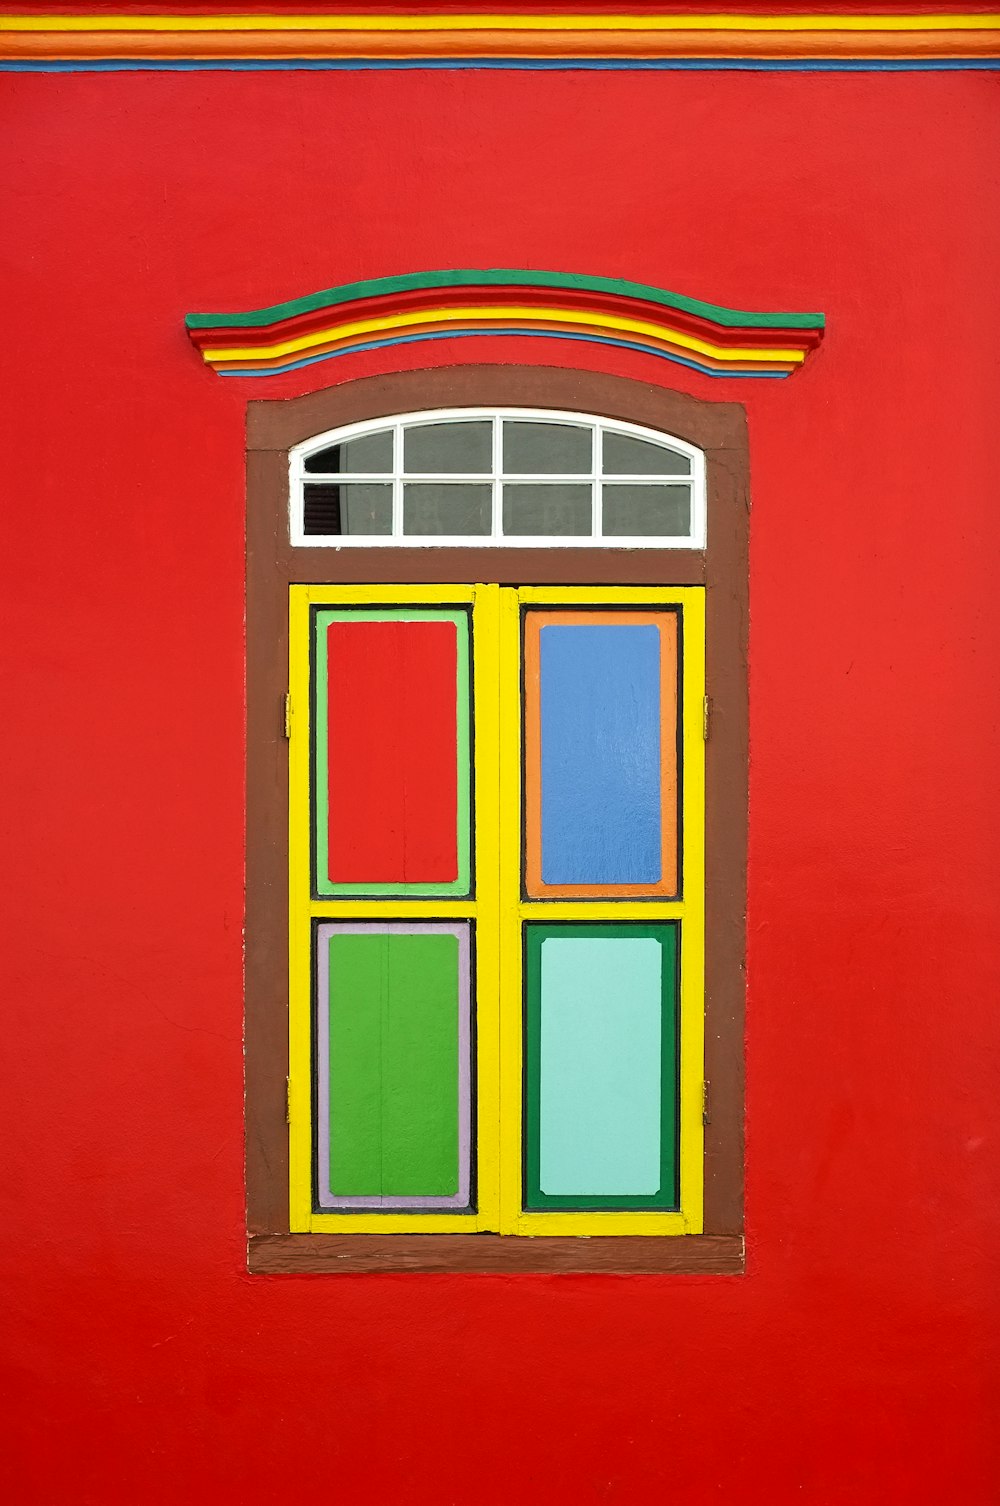 multicolored window illustration